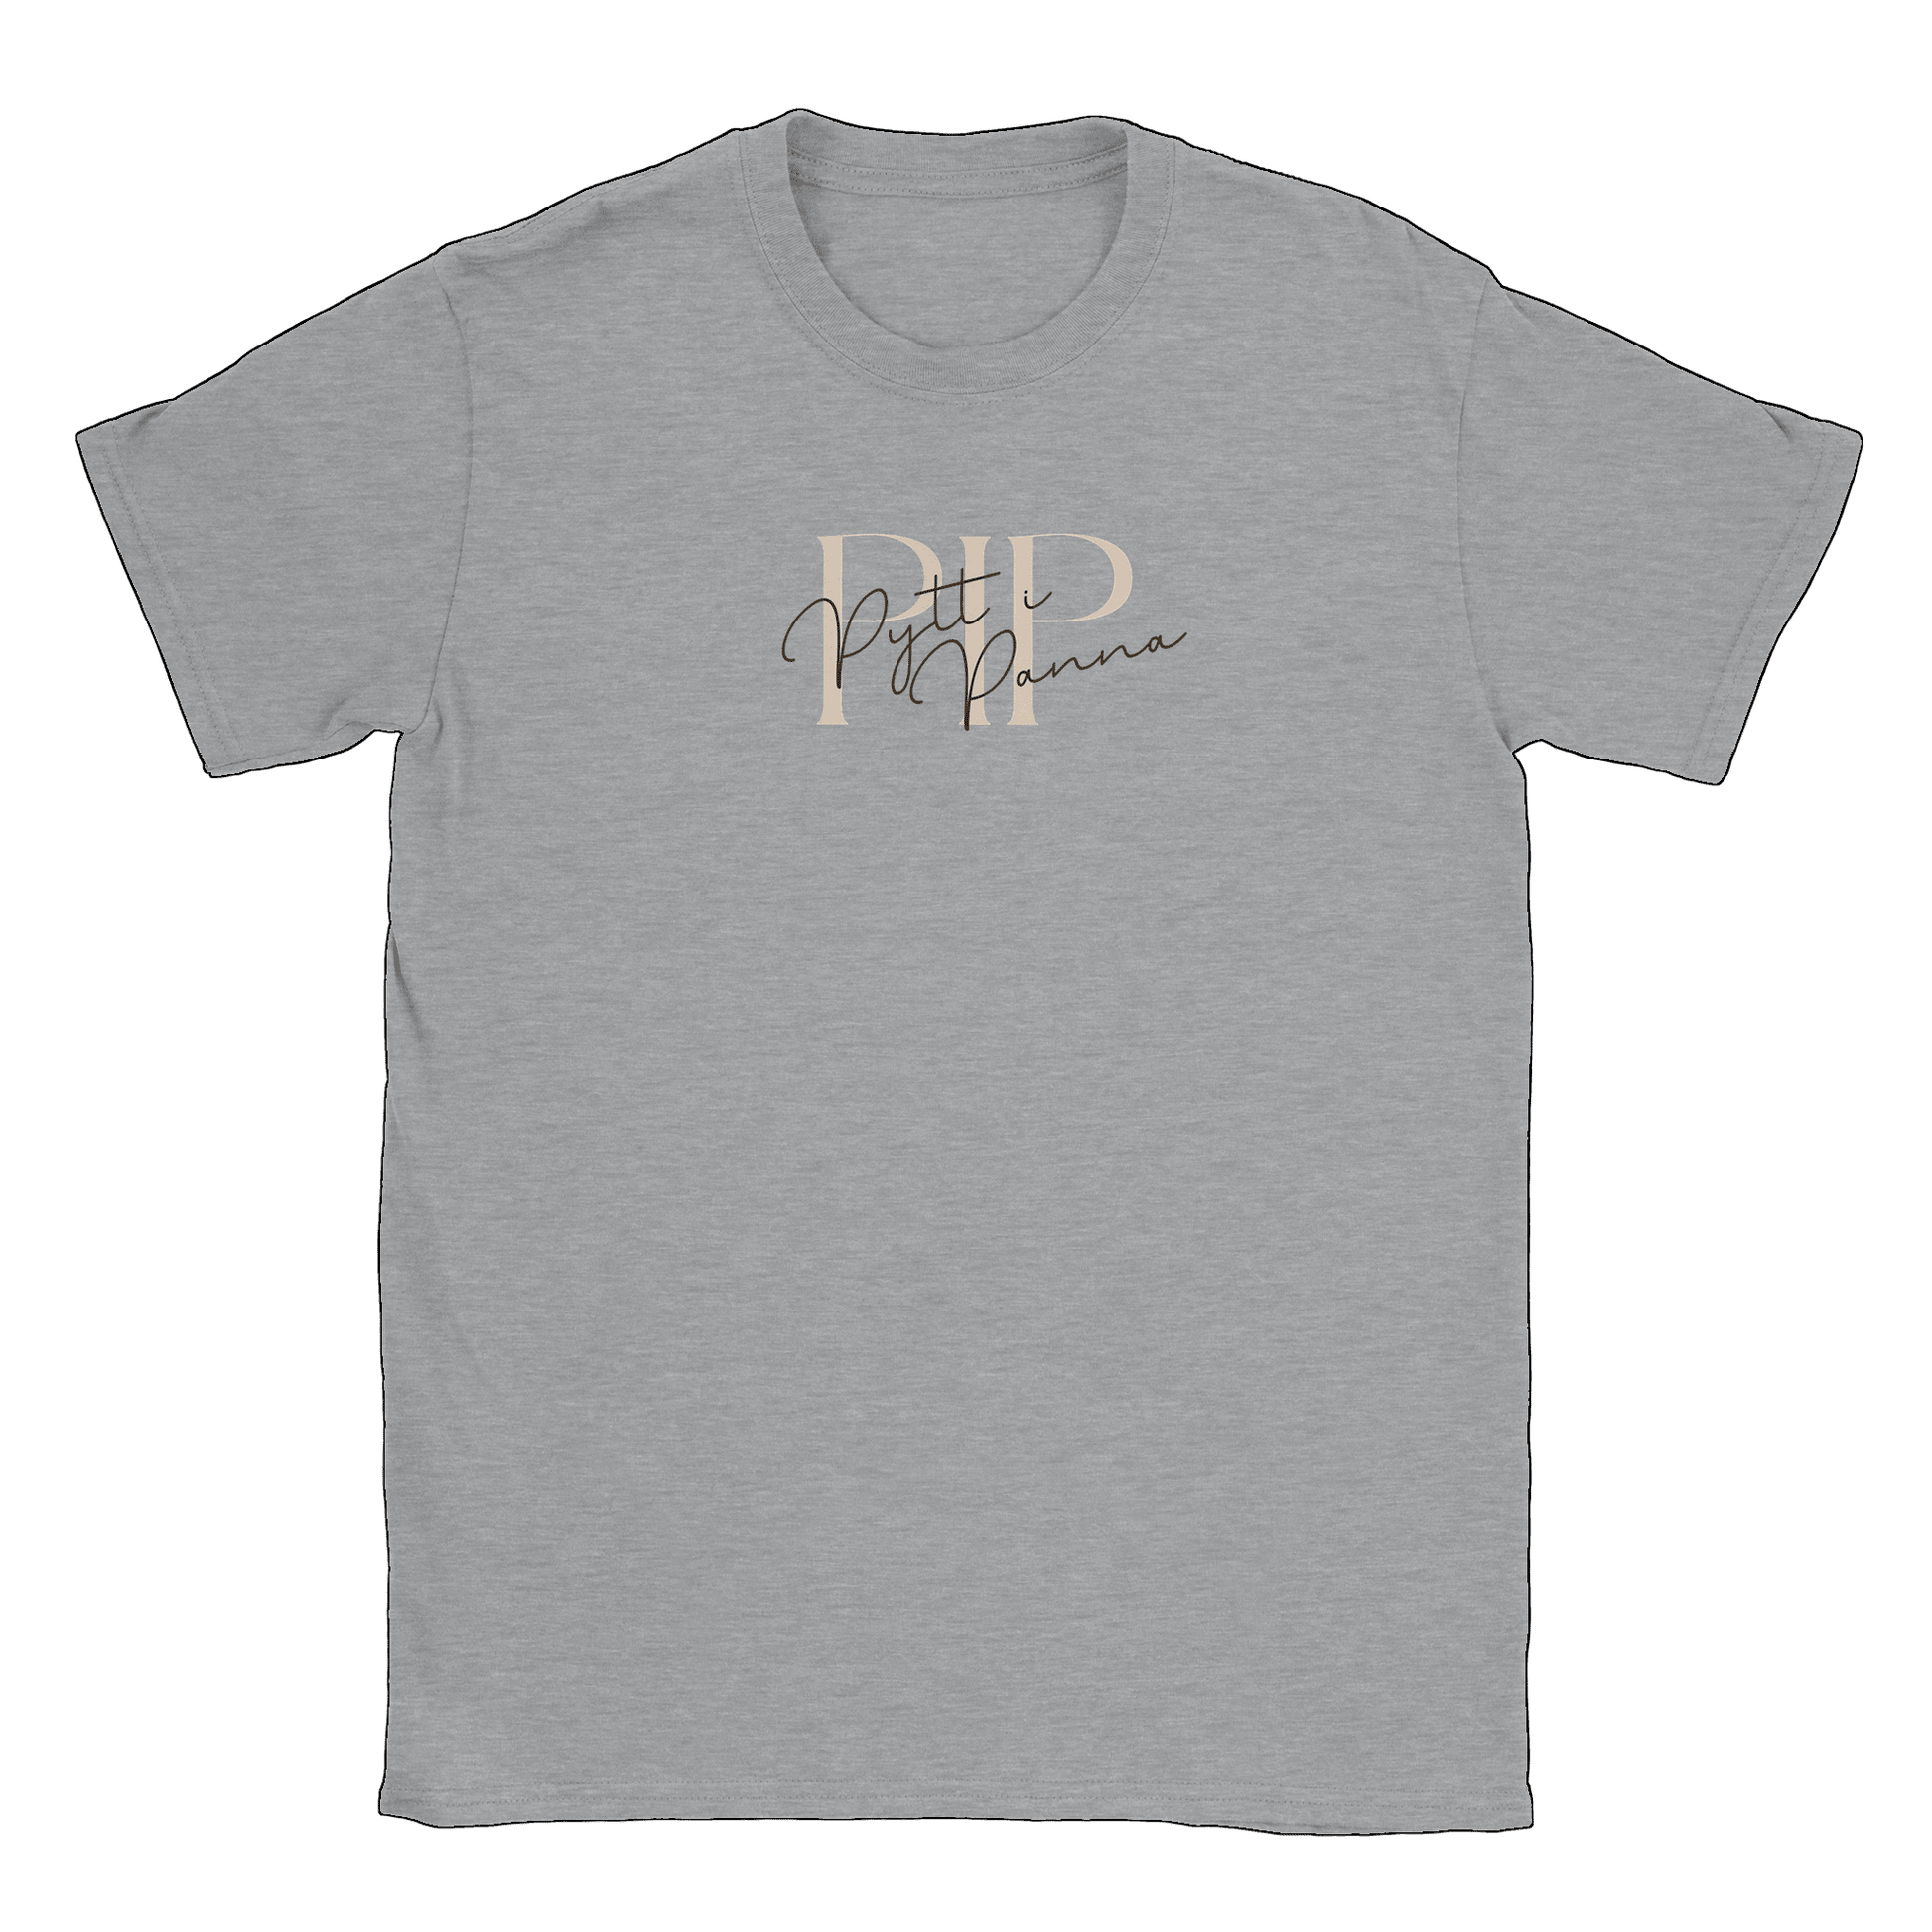 Pytt i Panna - T-shirt Sports Grey